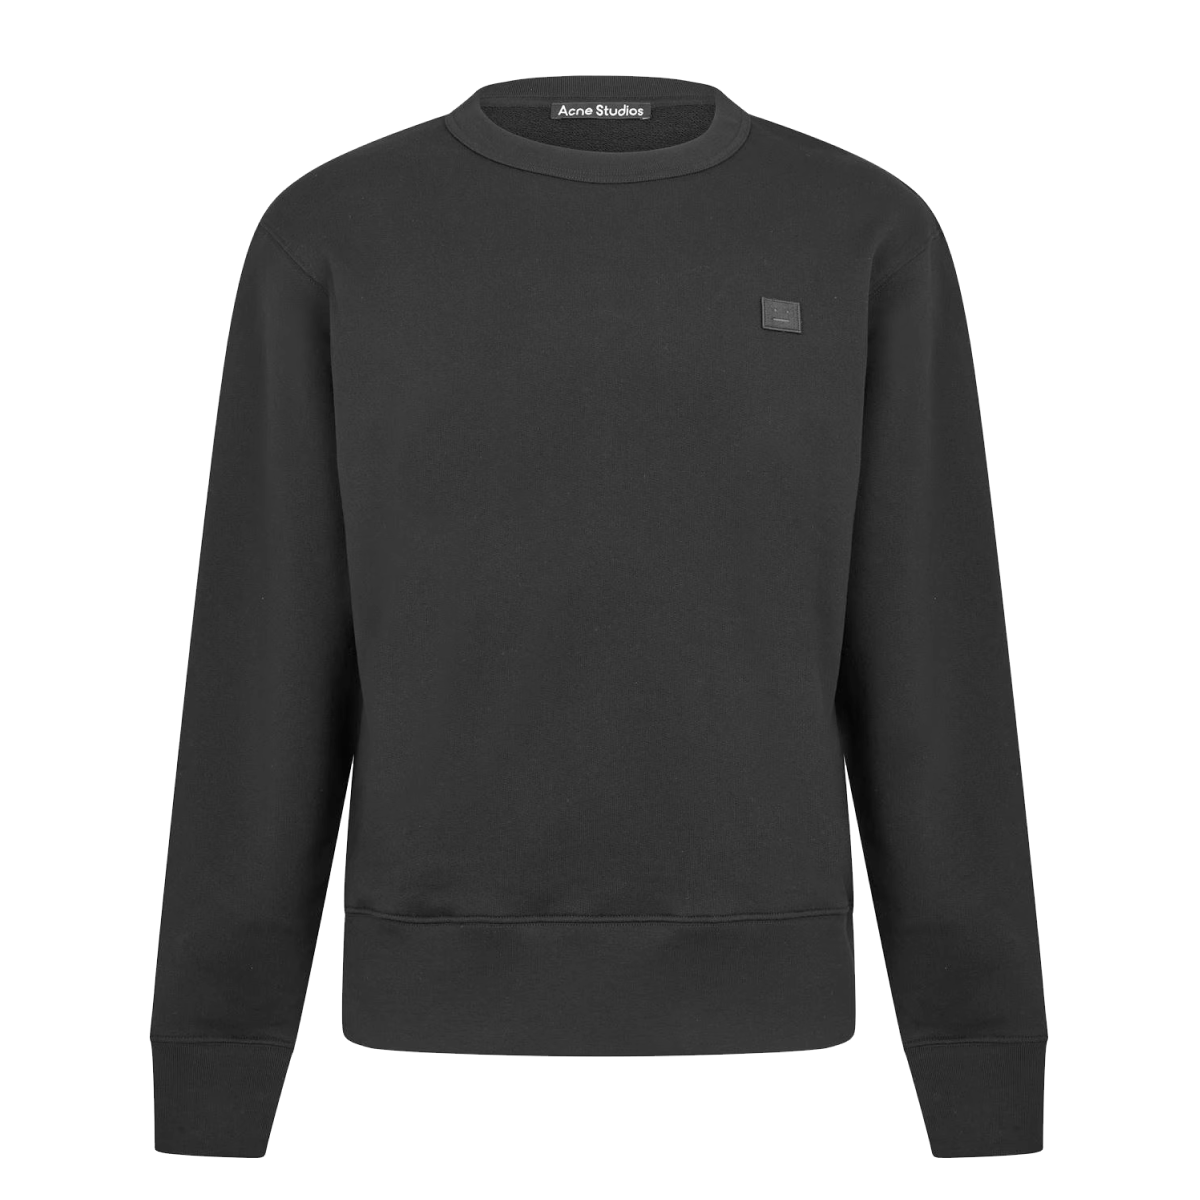 Black sweatshirt with classic Acne studio face logo